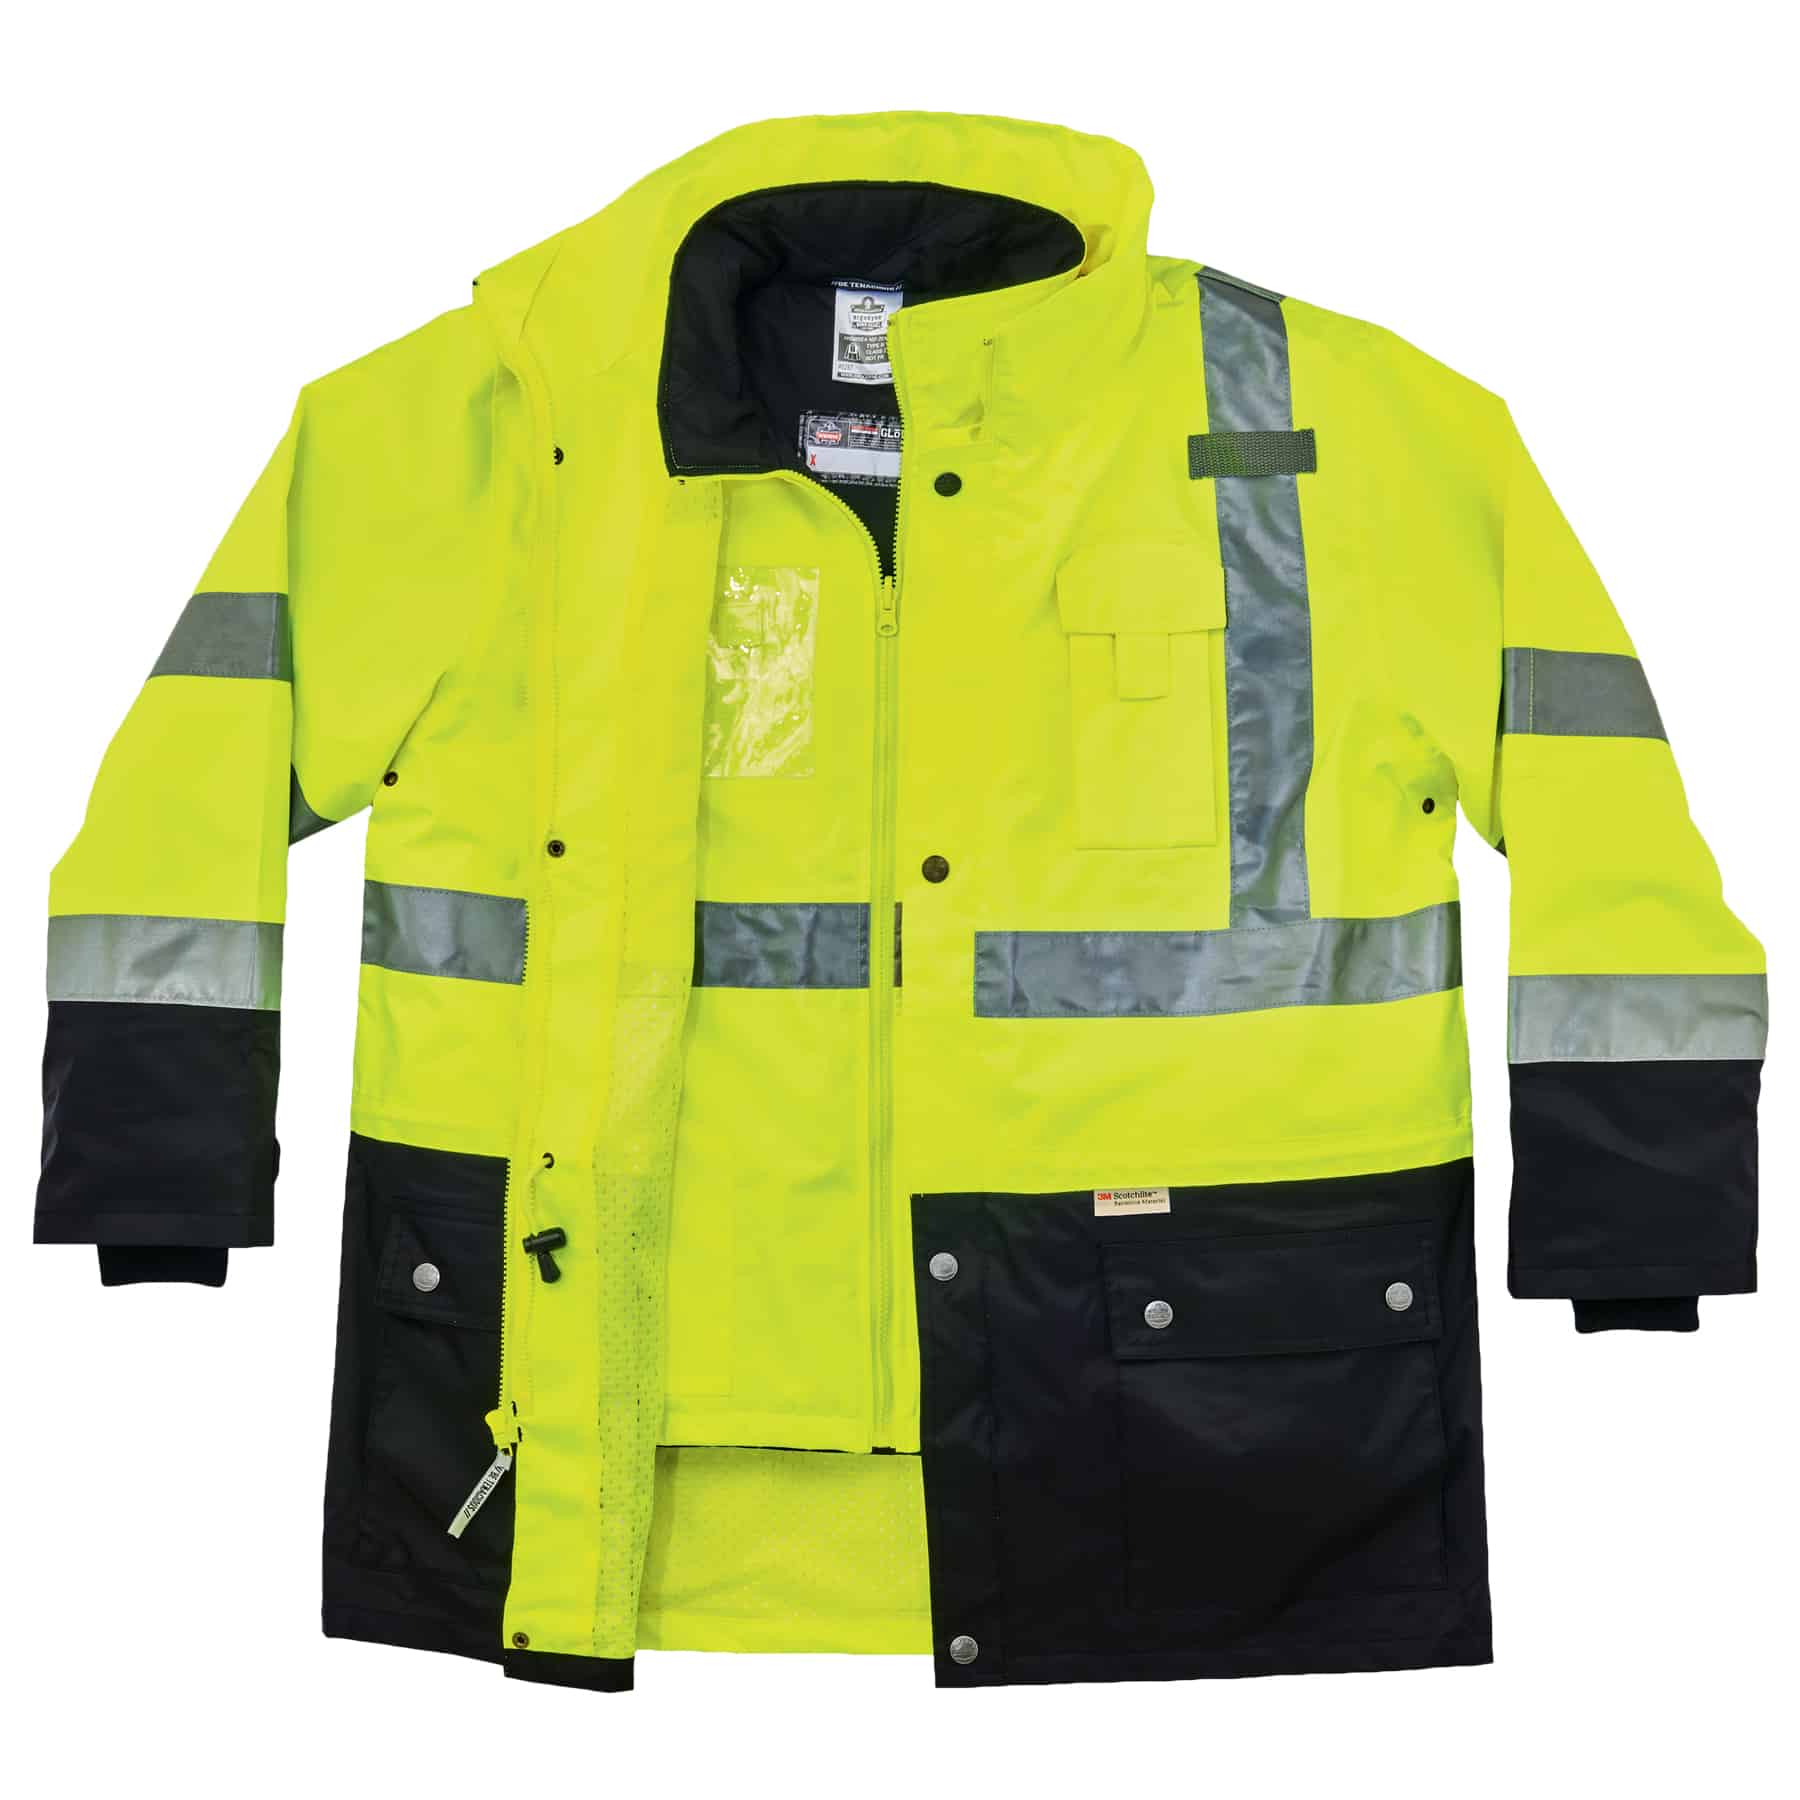 Outer Shell Hi-Vis Safety Jacket & Thermal Winter Coat | Ergodyne